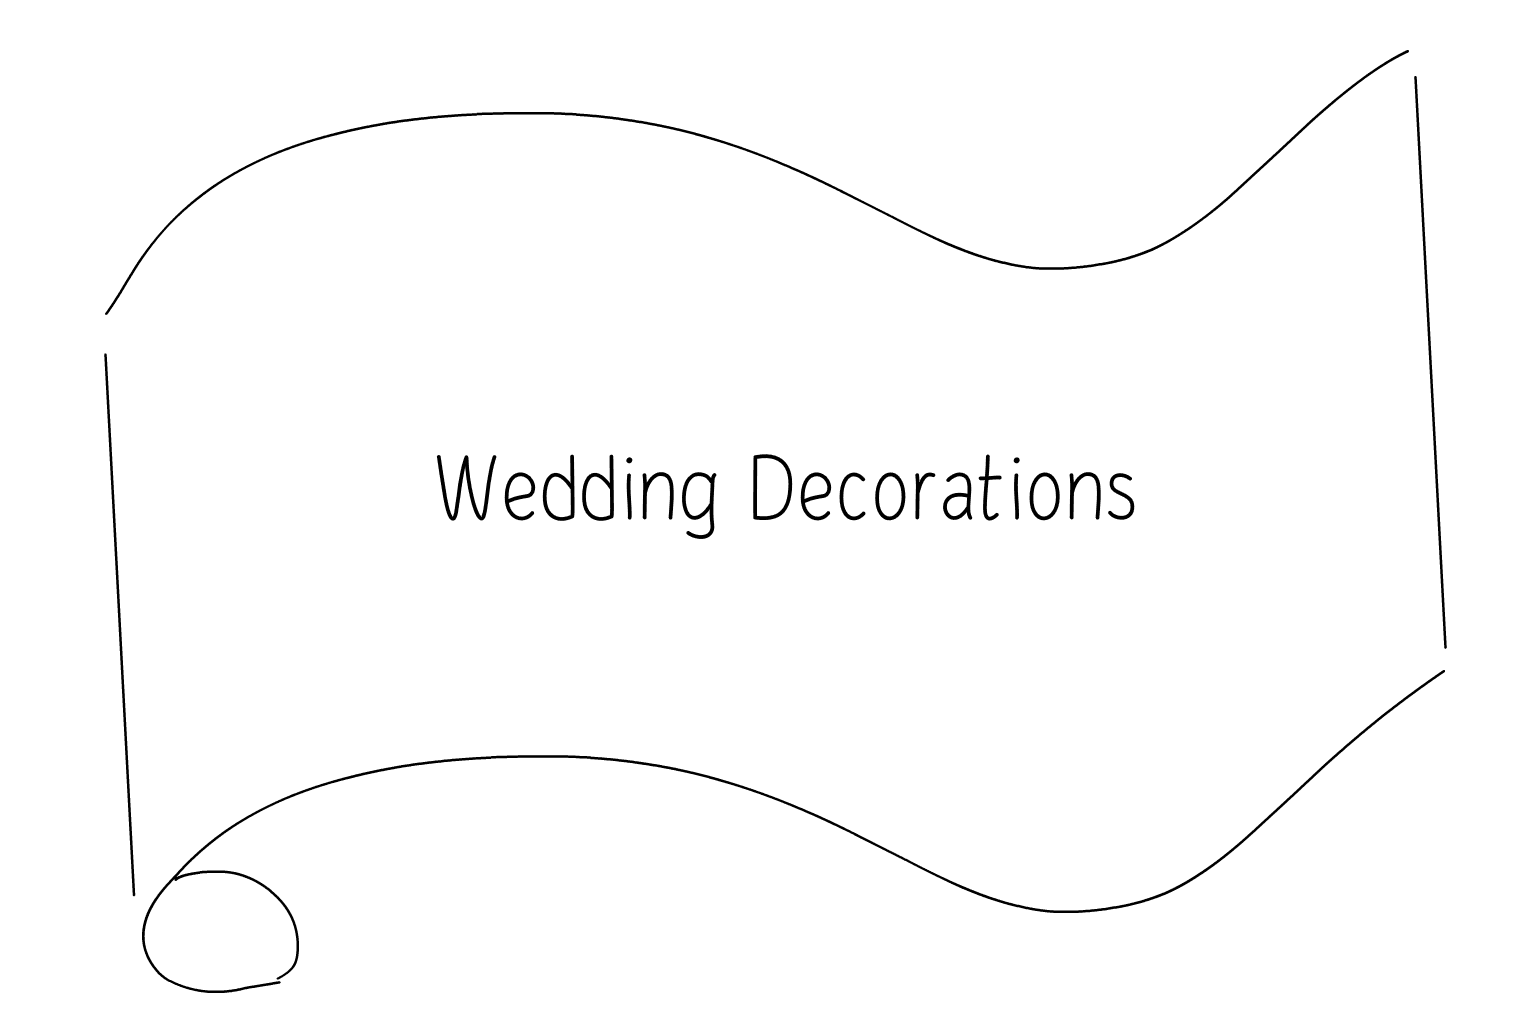 Illustration of Wedding Decorations